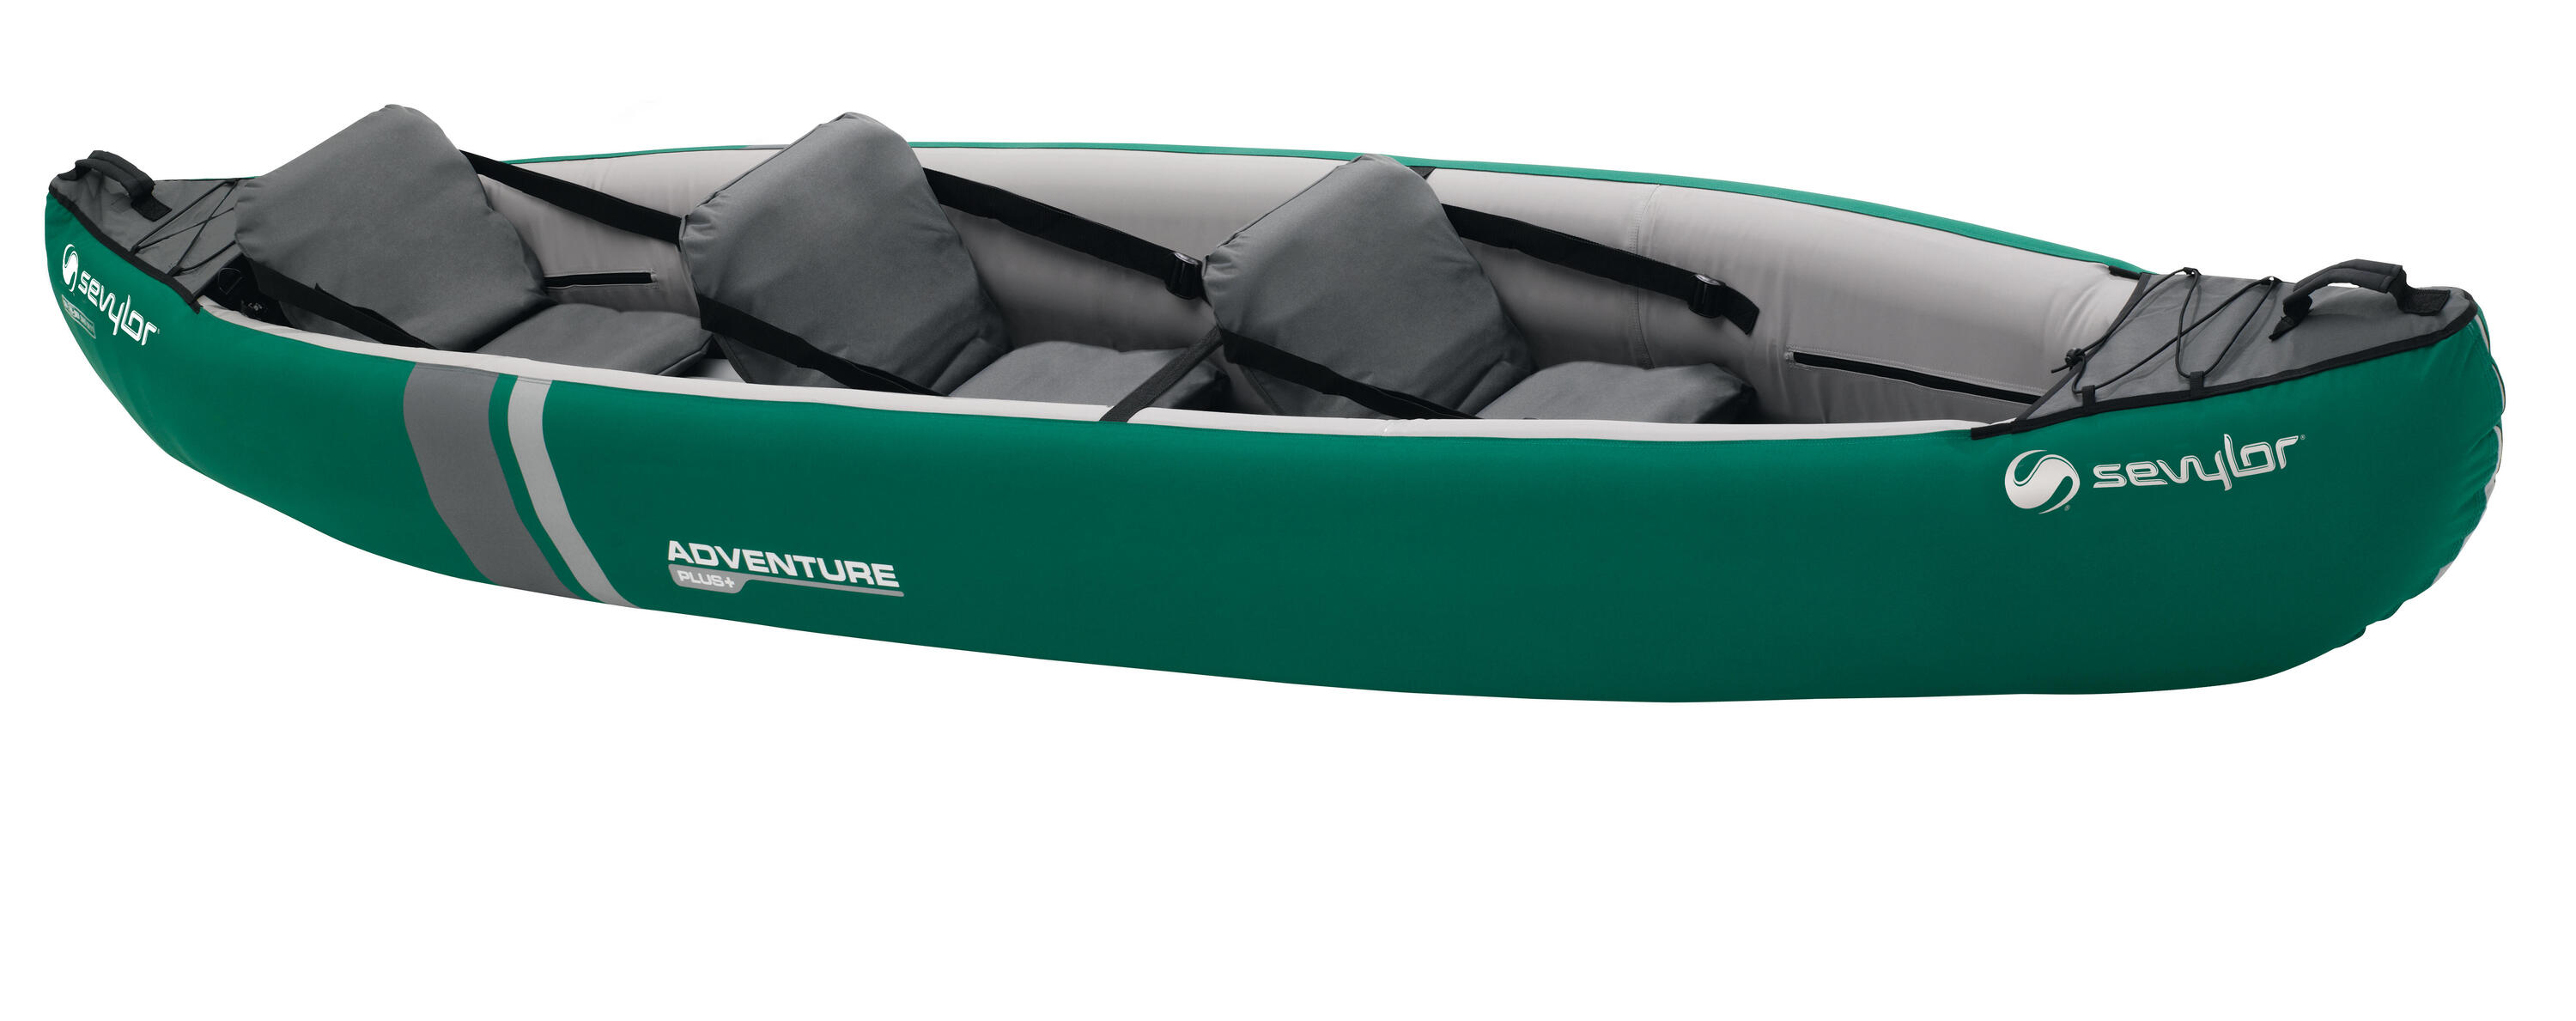 Adventure Plus 3 Person Inflatable Canoe/kayak - Green 1/6